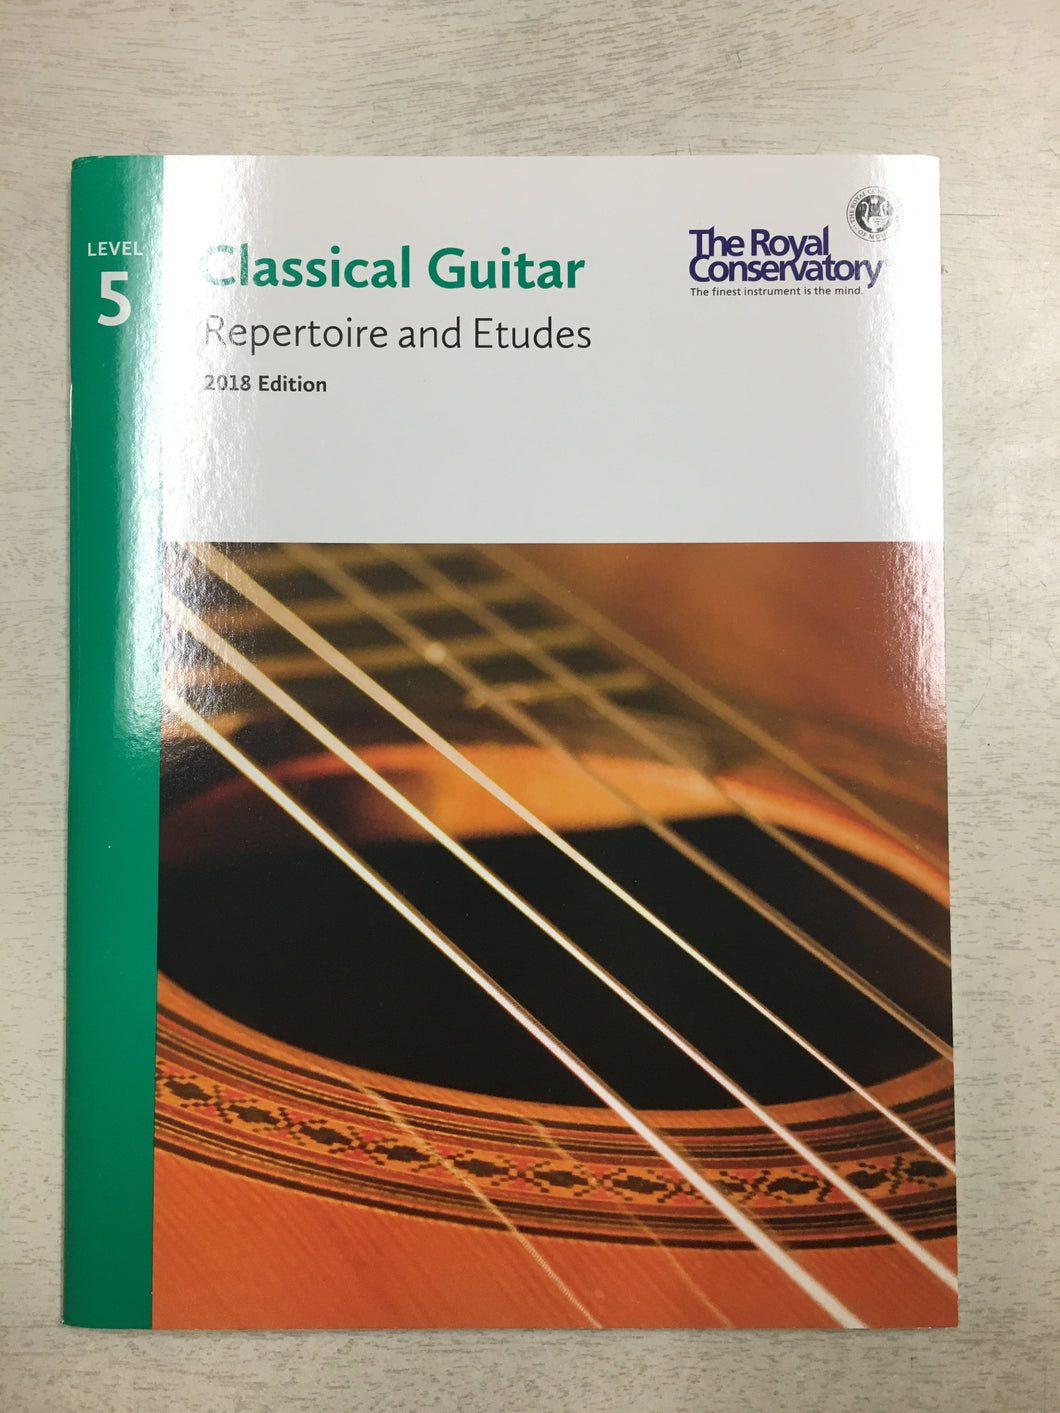 Classical Guitar Series RCM, 2018 Edition: Repertoire and Etudes 5